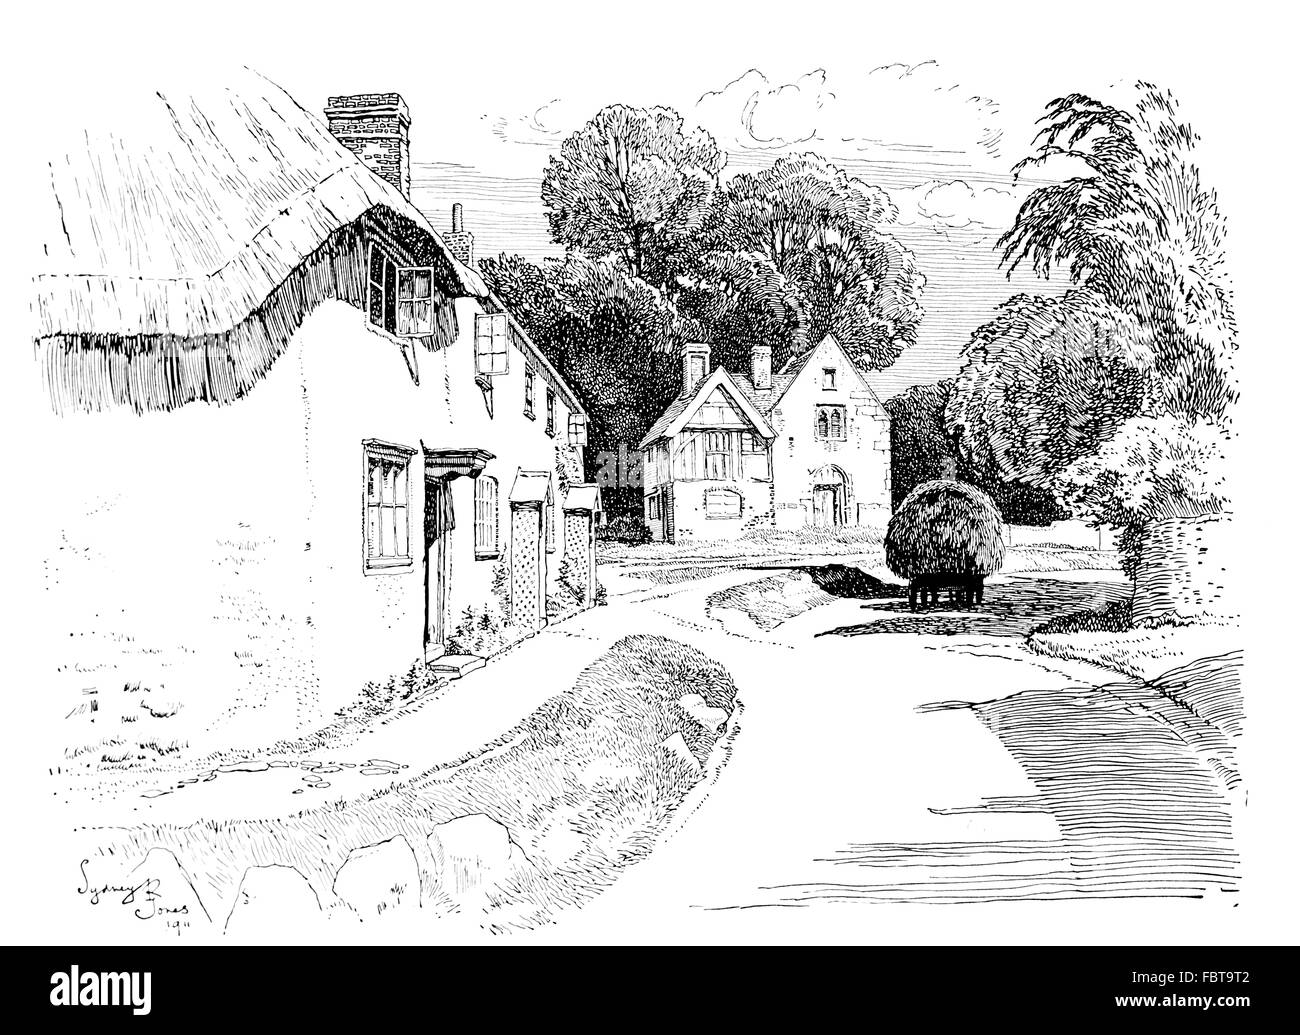 UK, England, Oxfordshire, East Hendred, Chapel Square, properties around Wheatsheaf public house in 1911, line illustration Stock Photo